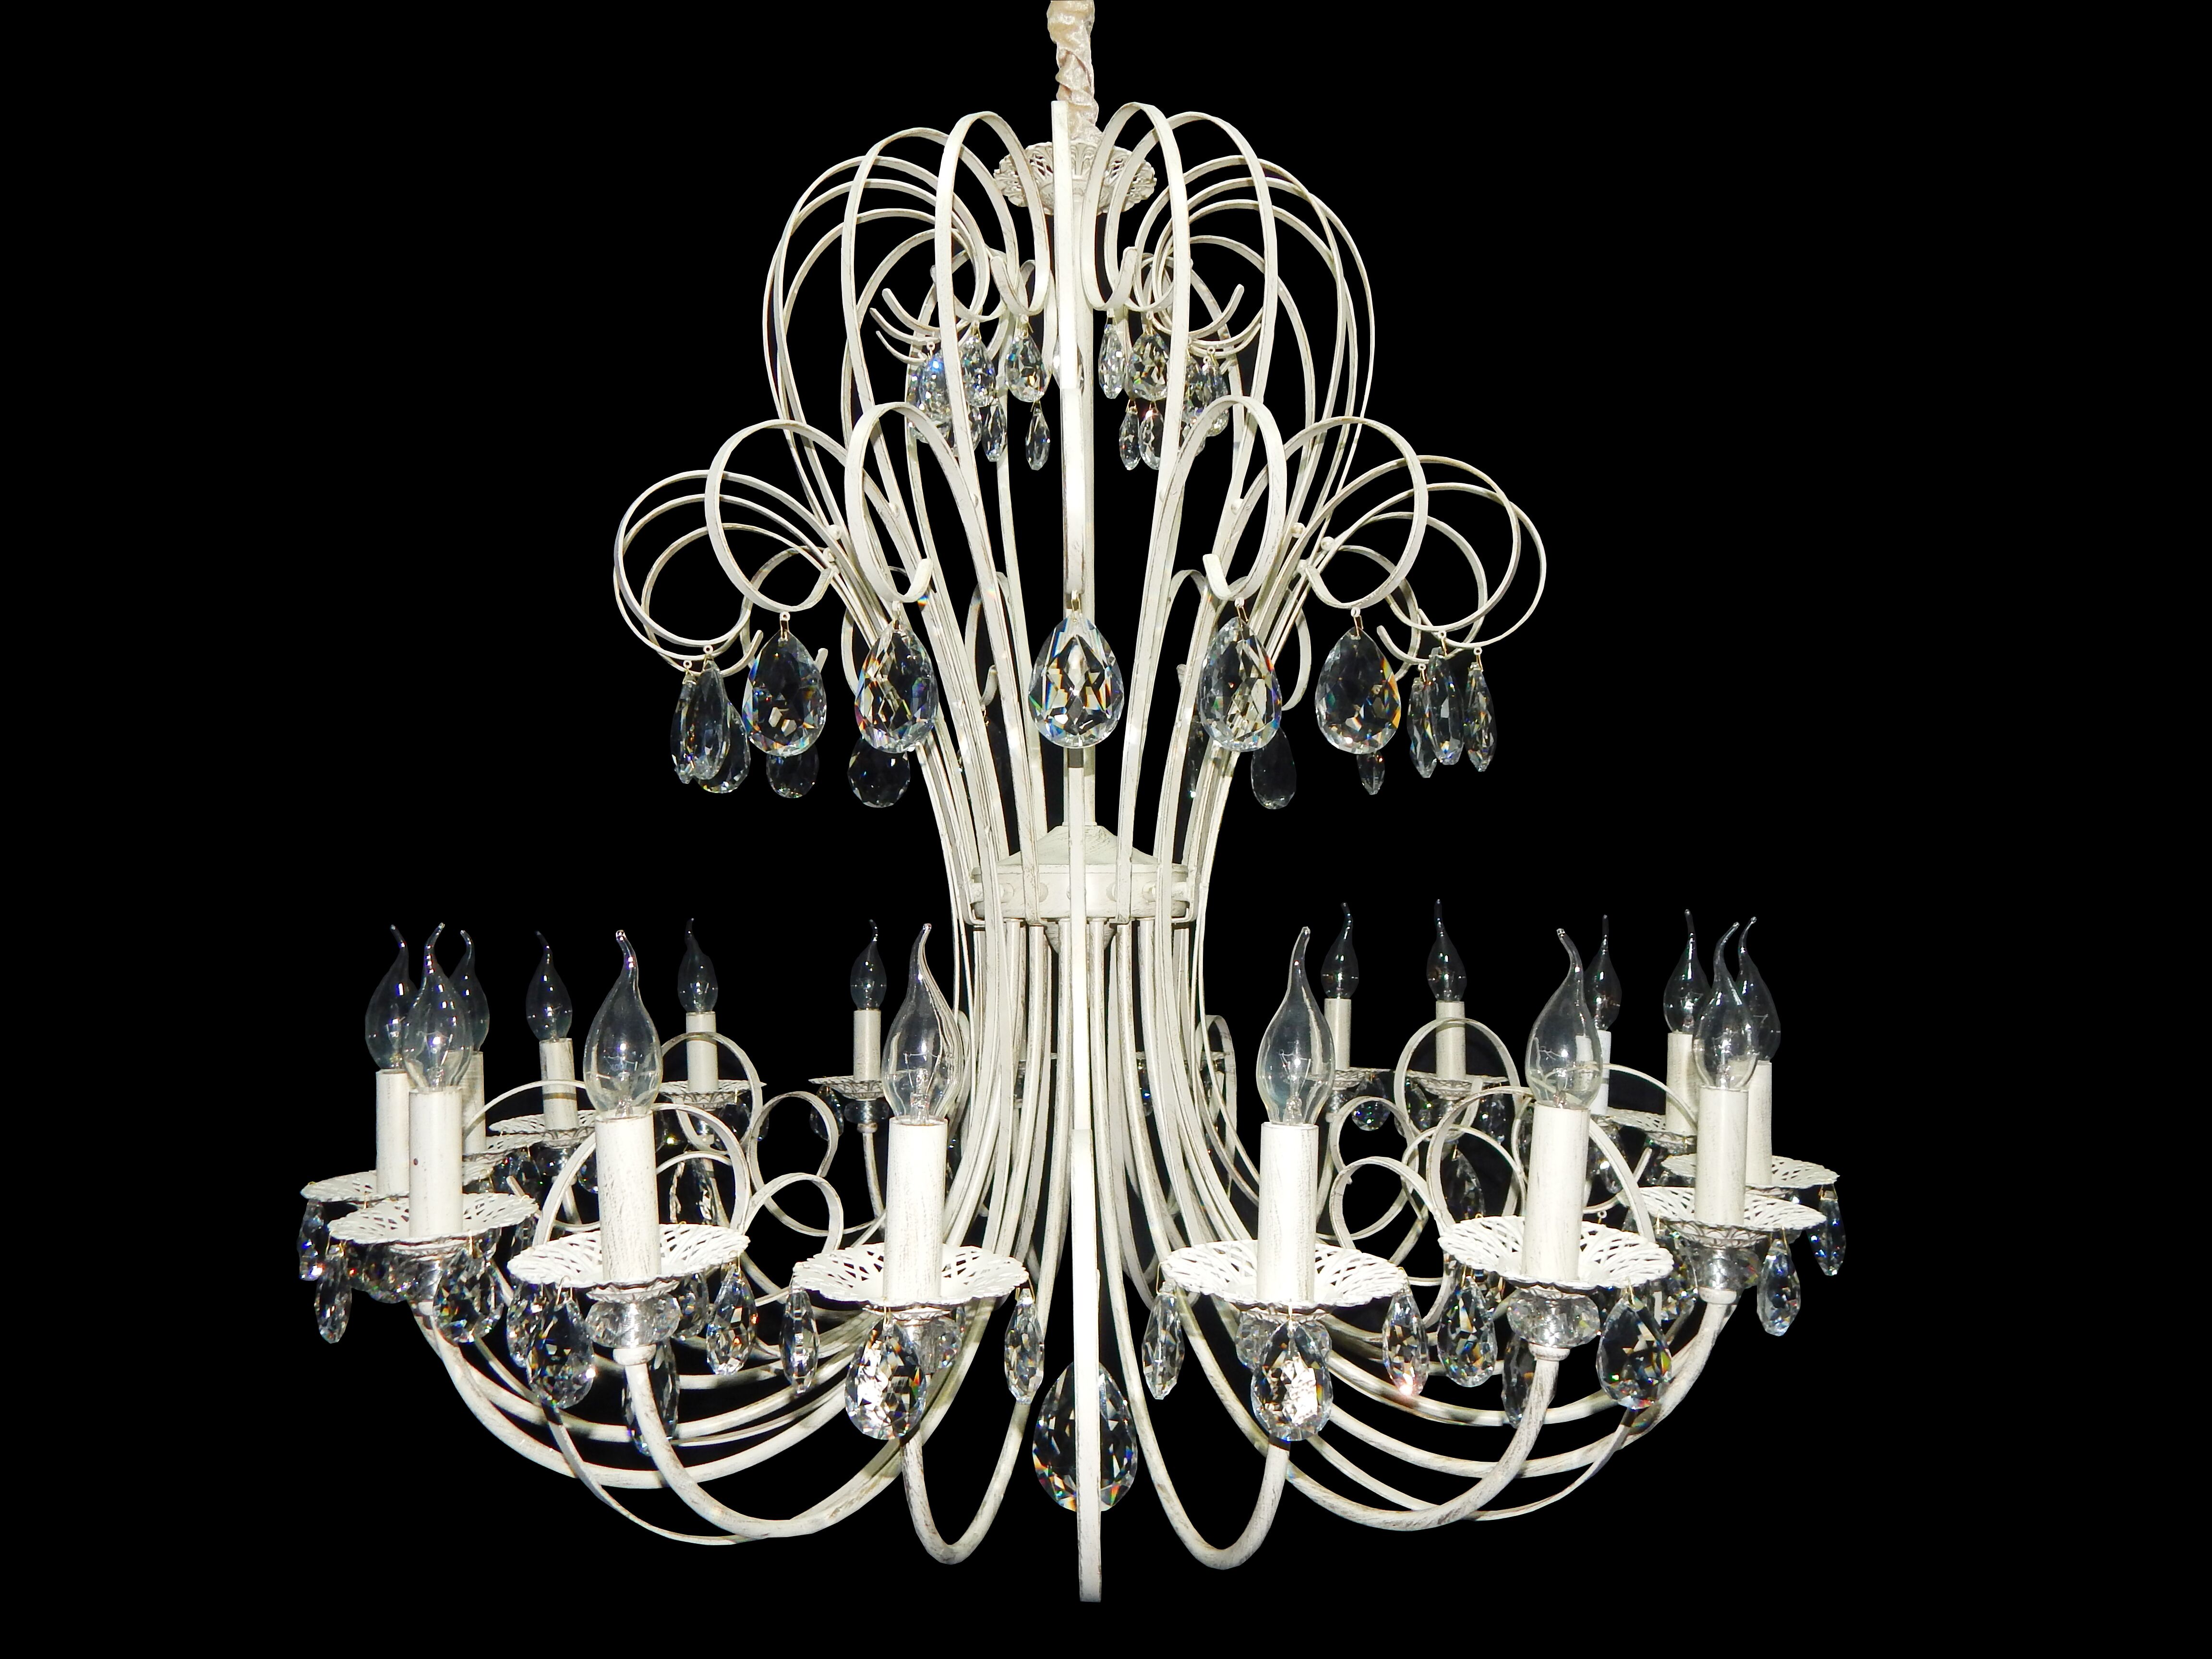 Line: fujian zf833-18 - y chandelier & hang droplight in English